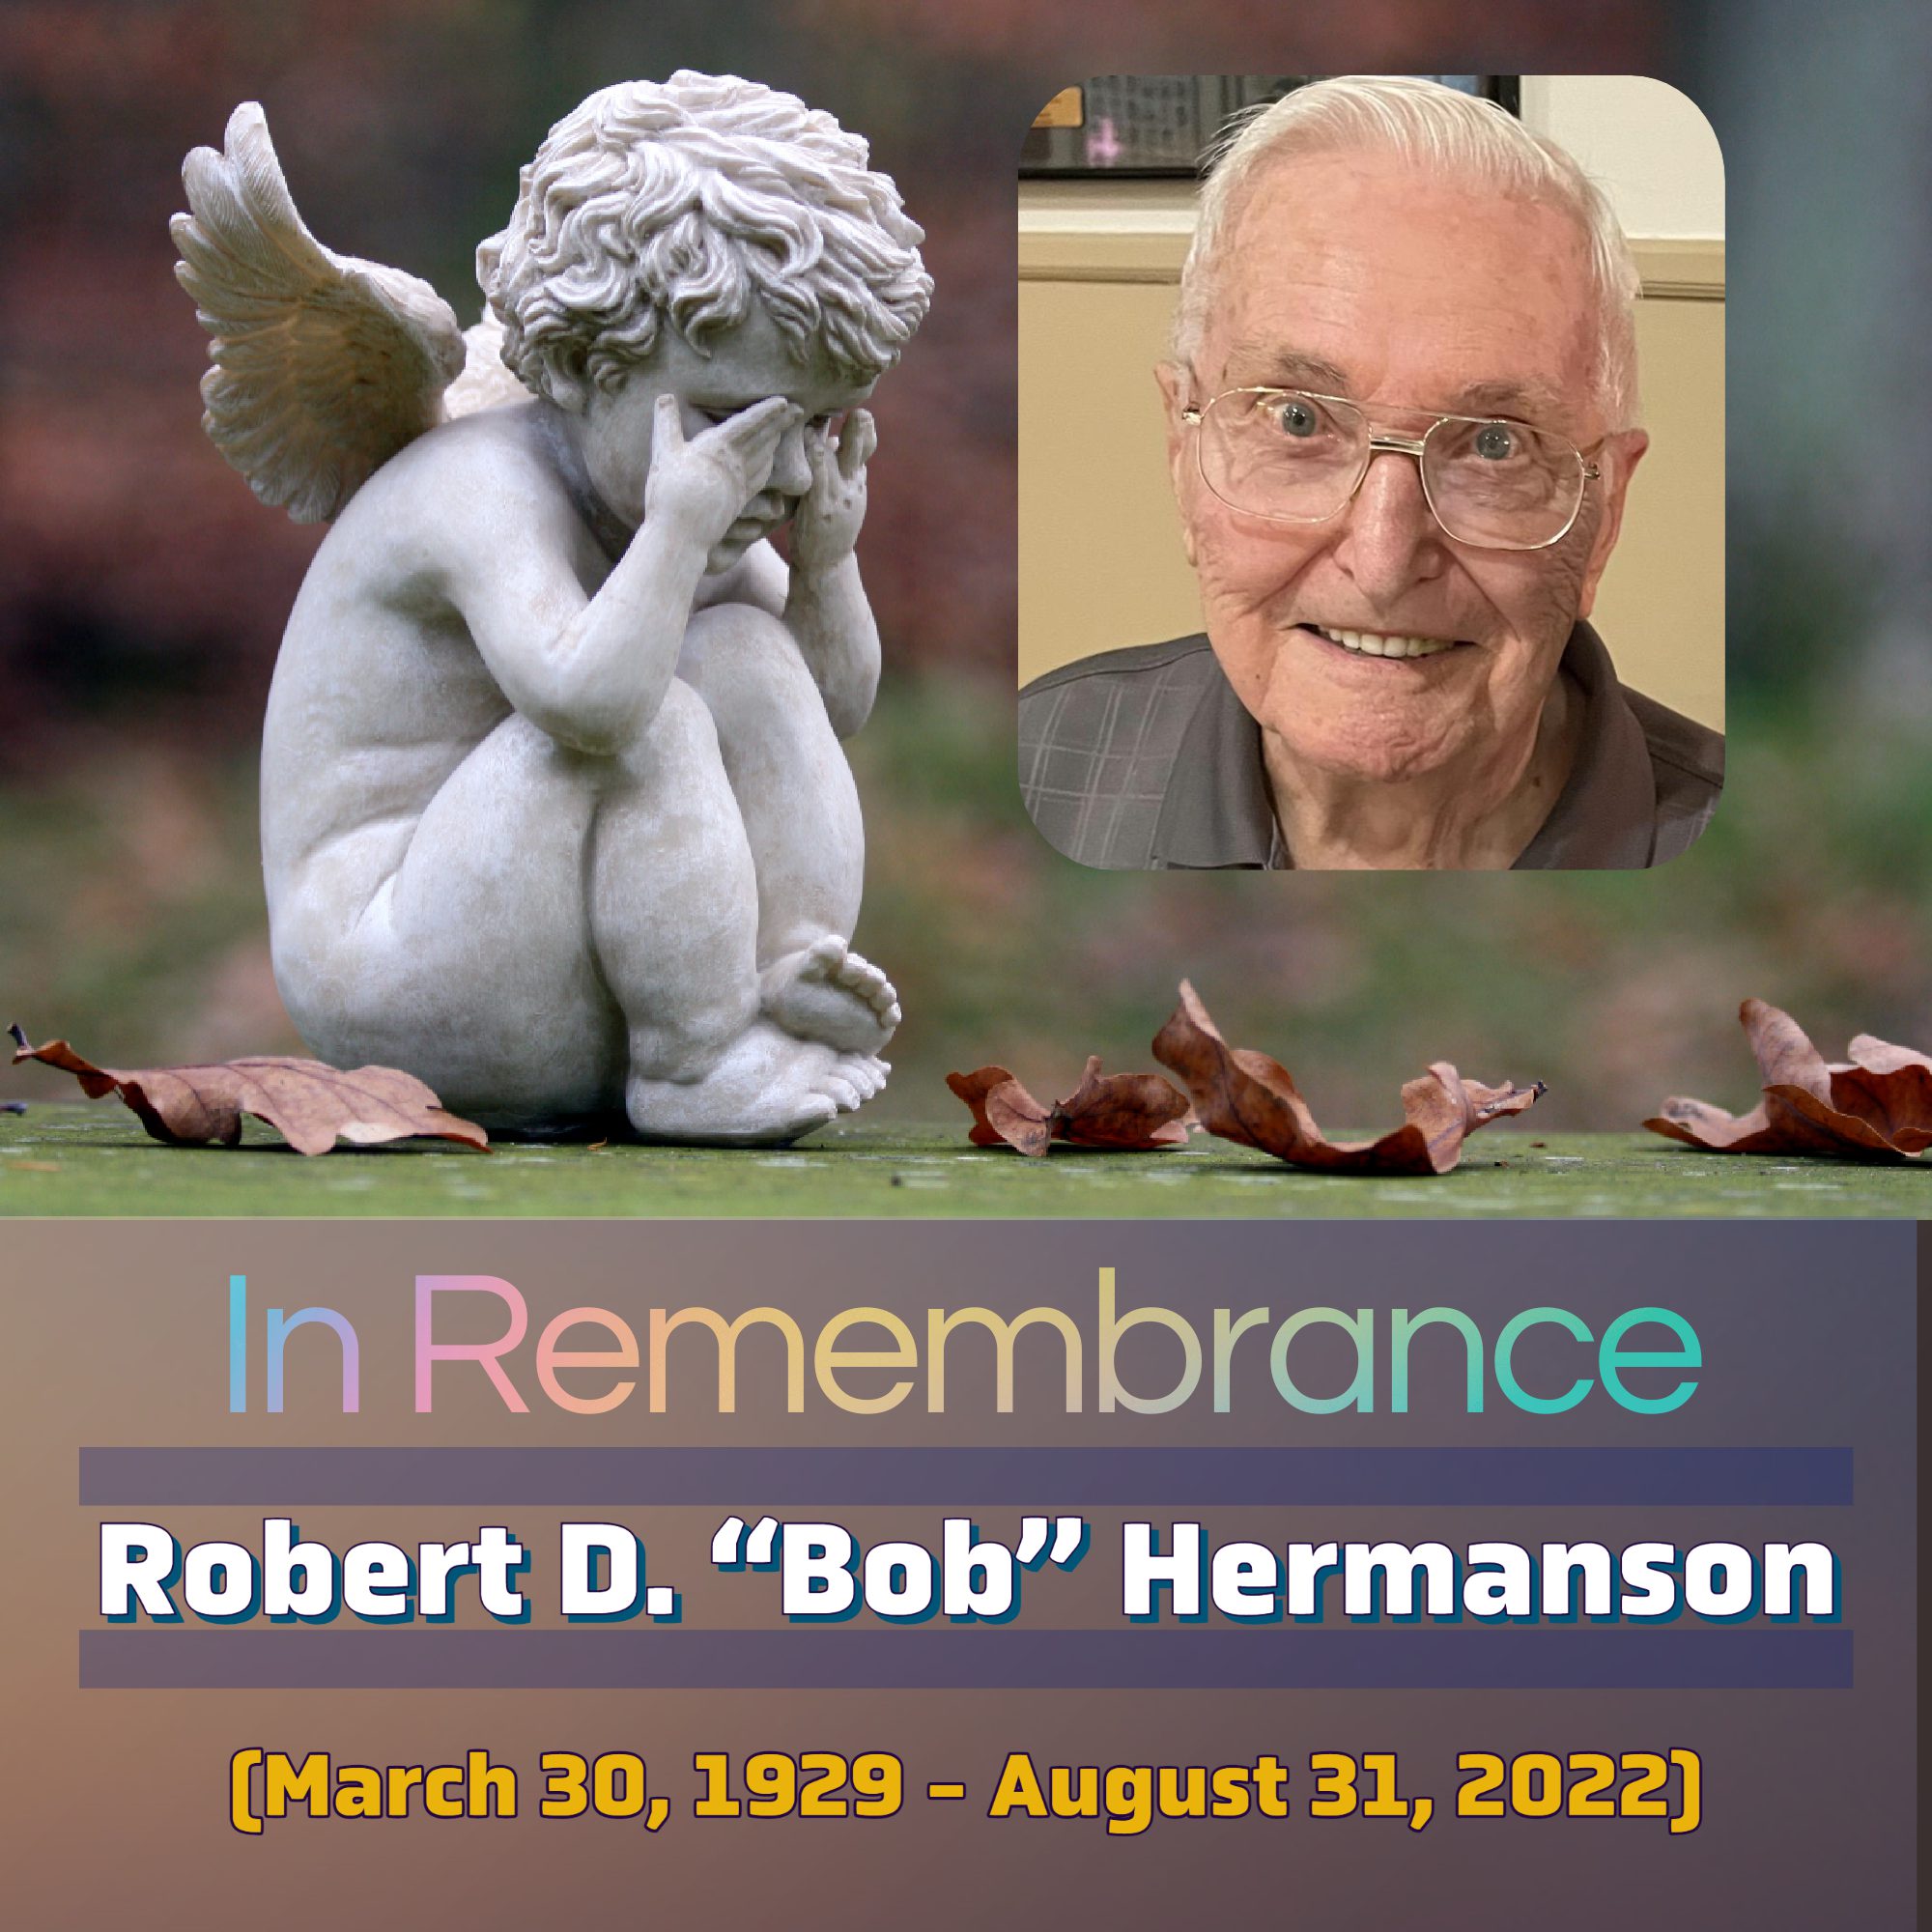 In Remembrance of Robert D. "Bob" Hermanson